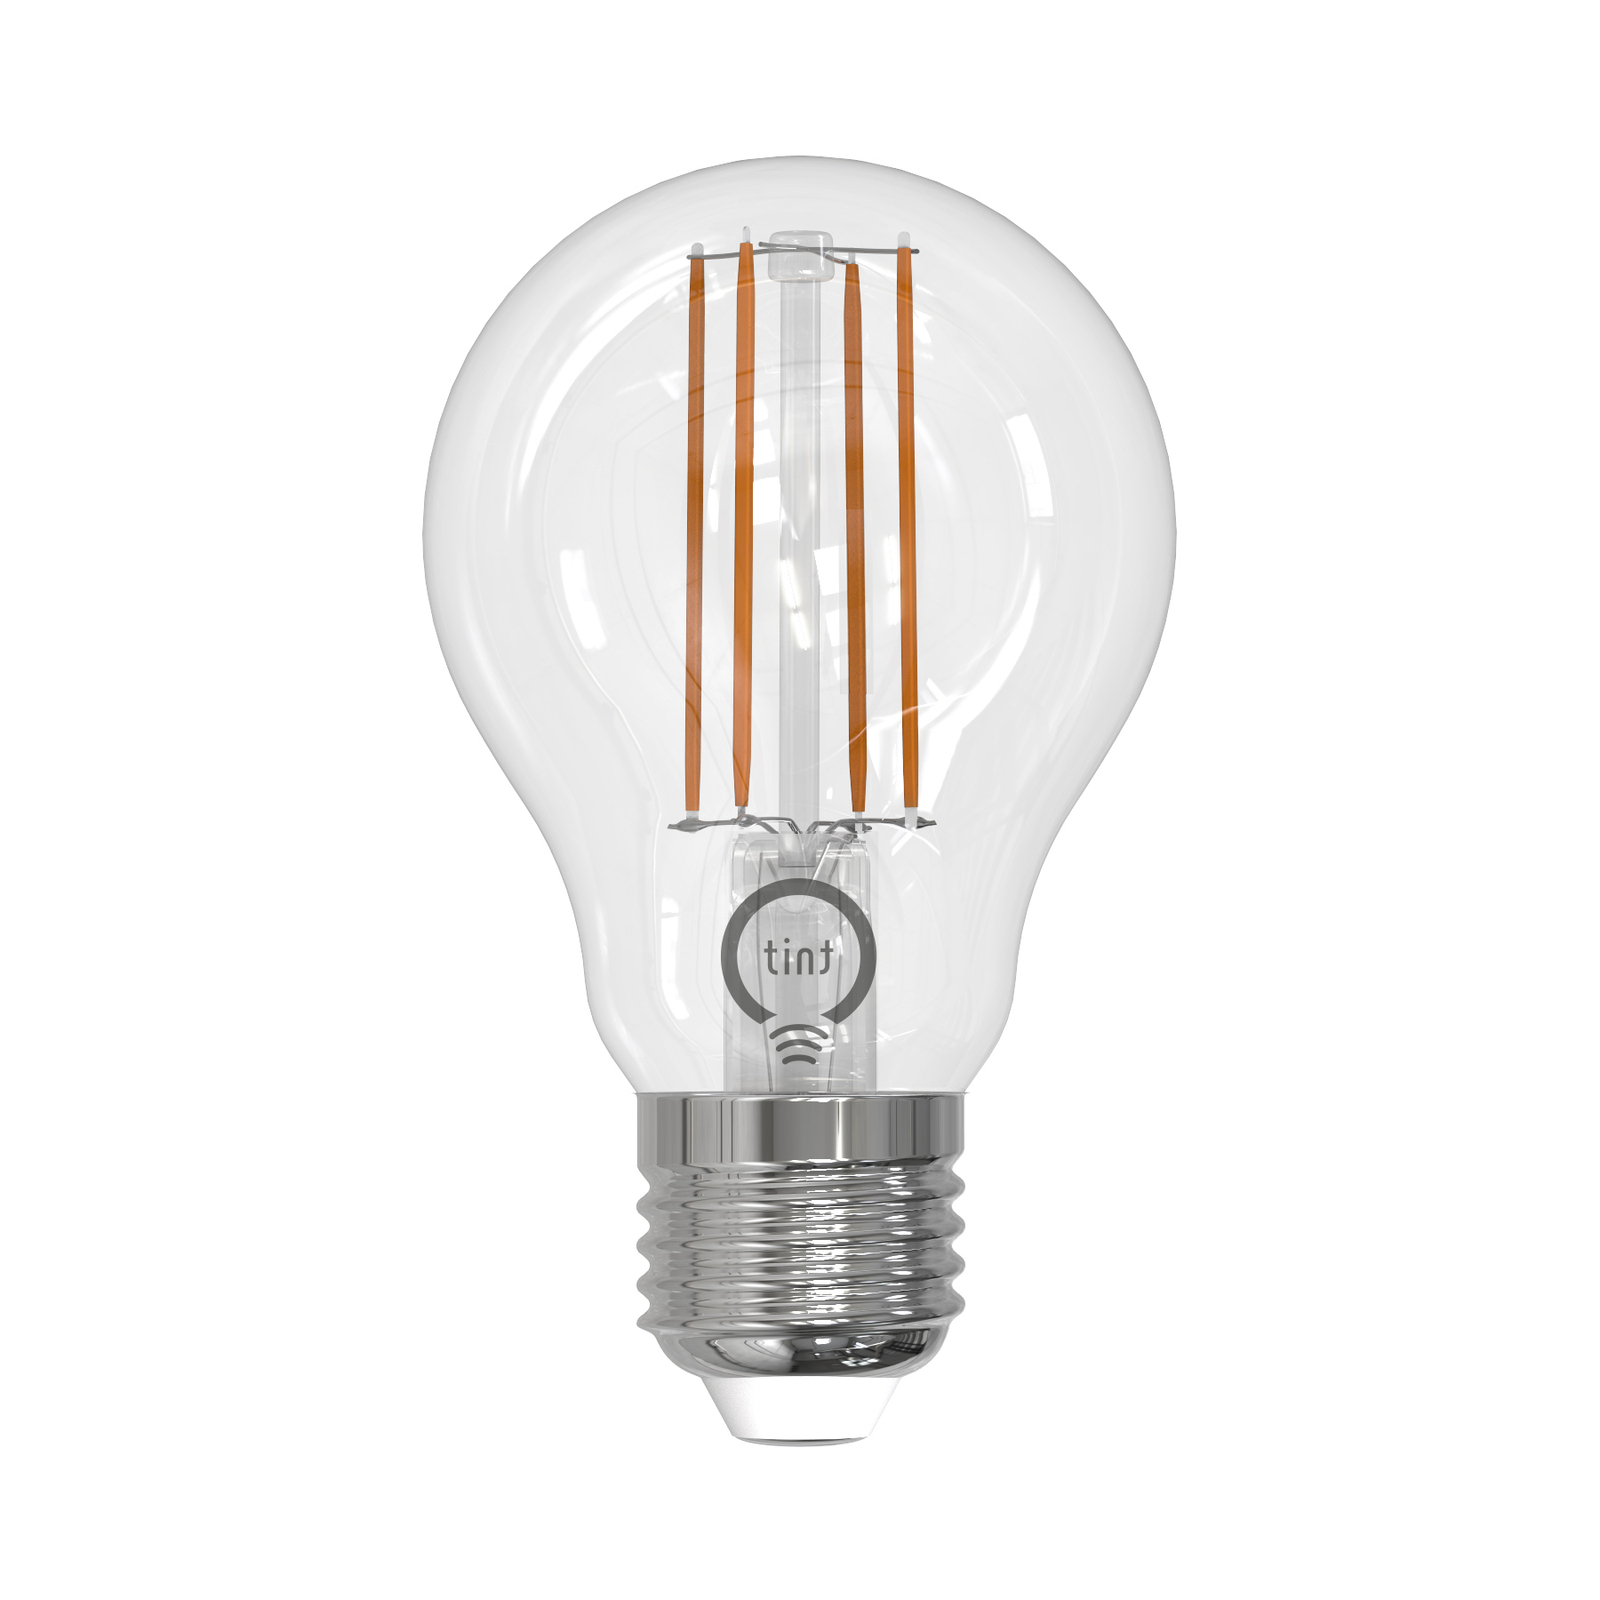 Müller Licht tint filament LED bulb E27 7 W CCT